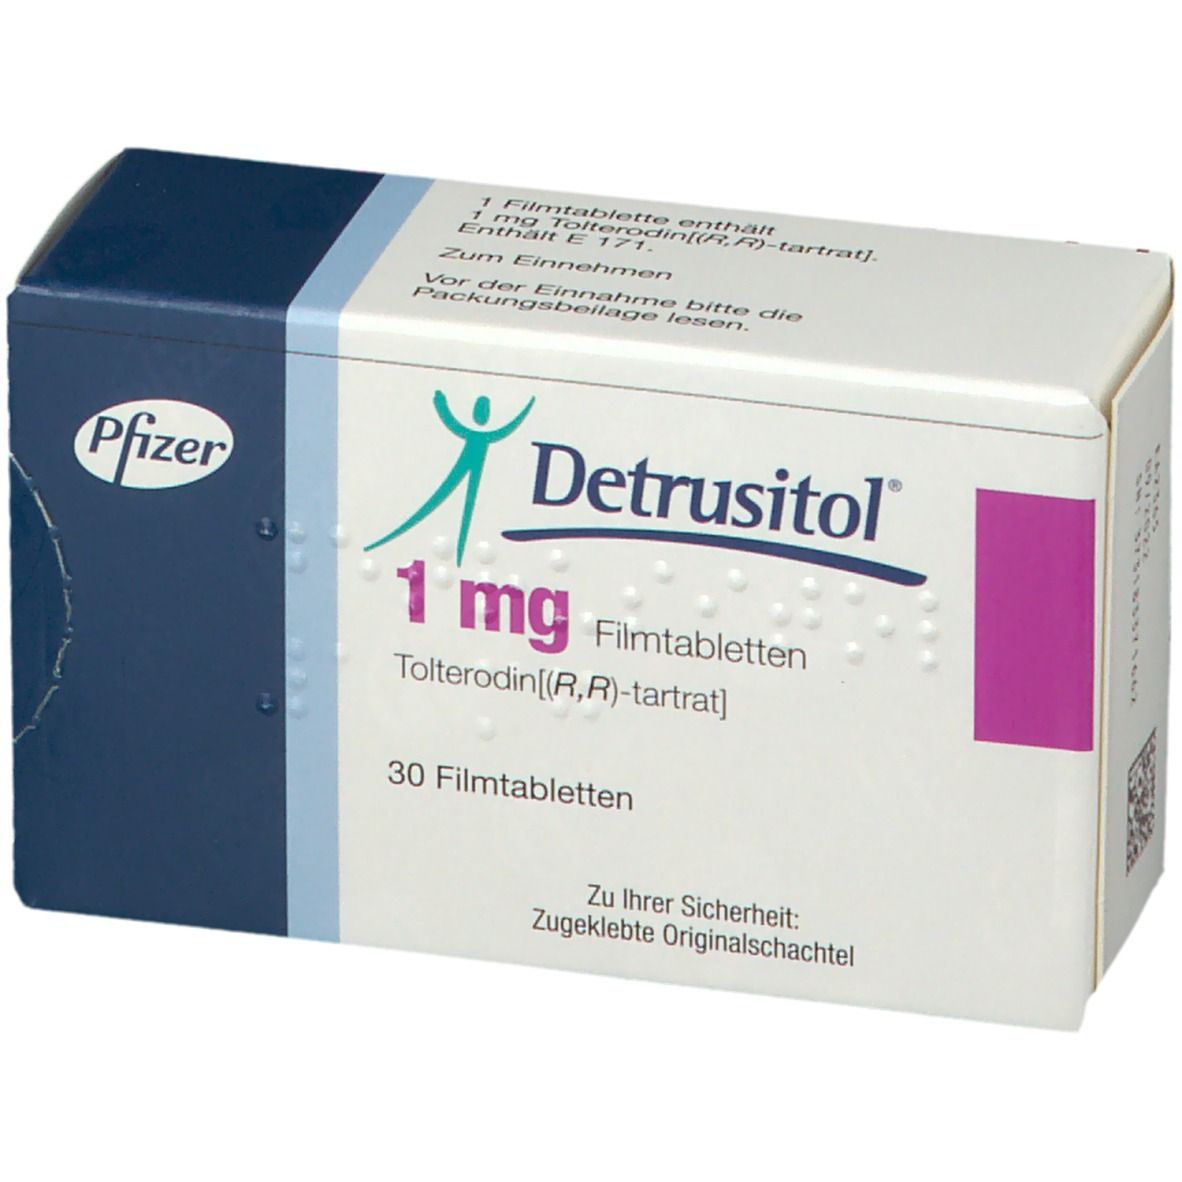 Detrusitol® 1 mg